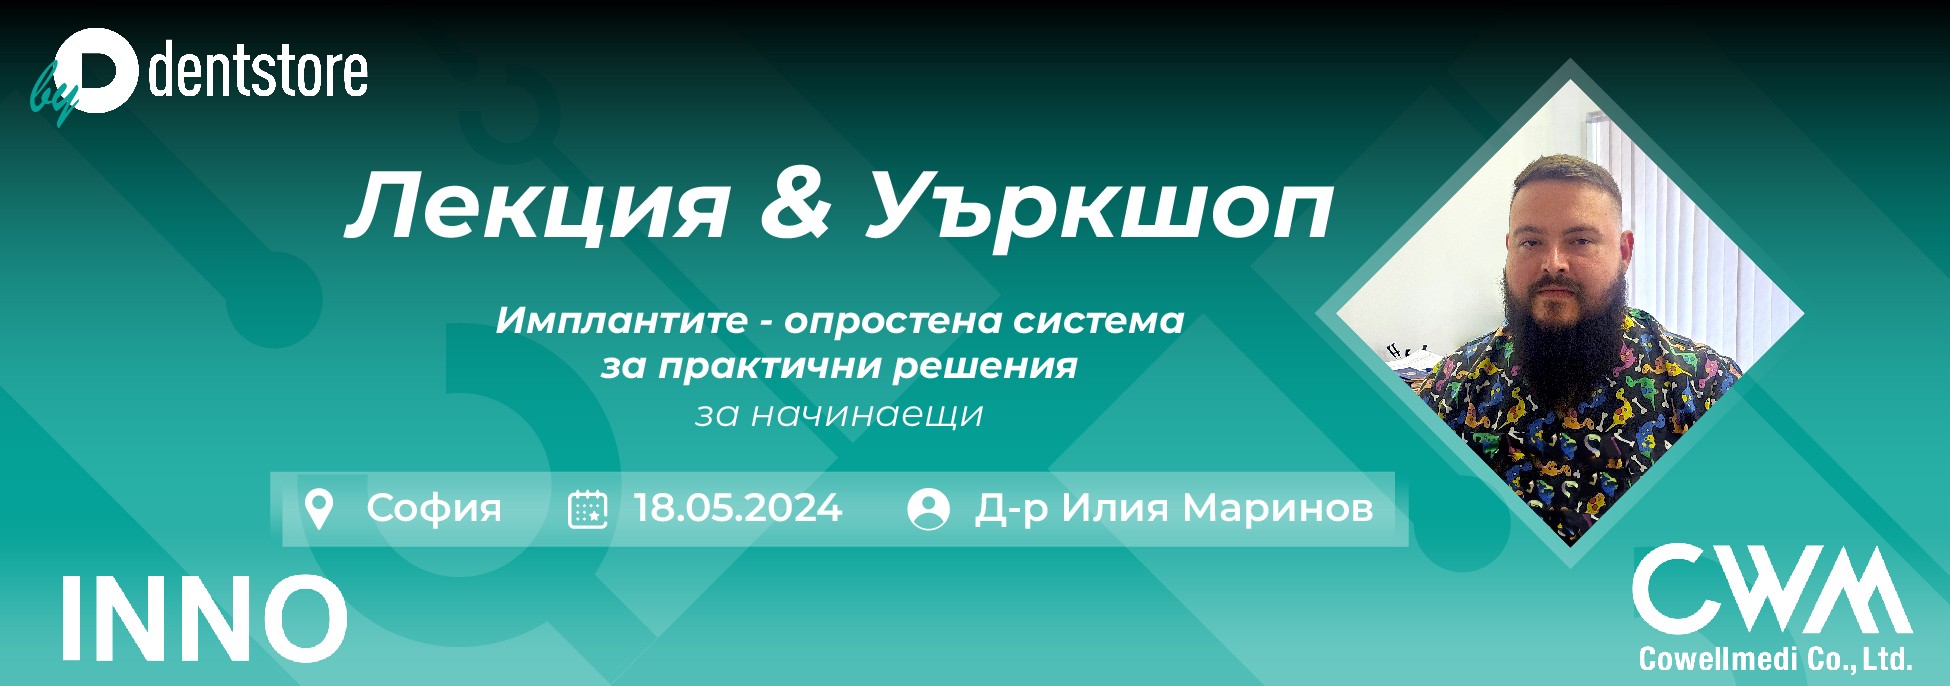 Lecture/Workshop-Inno-dr.Marinov-